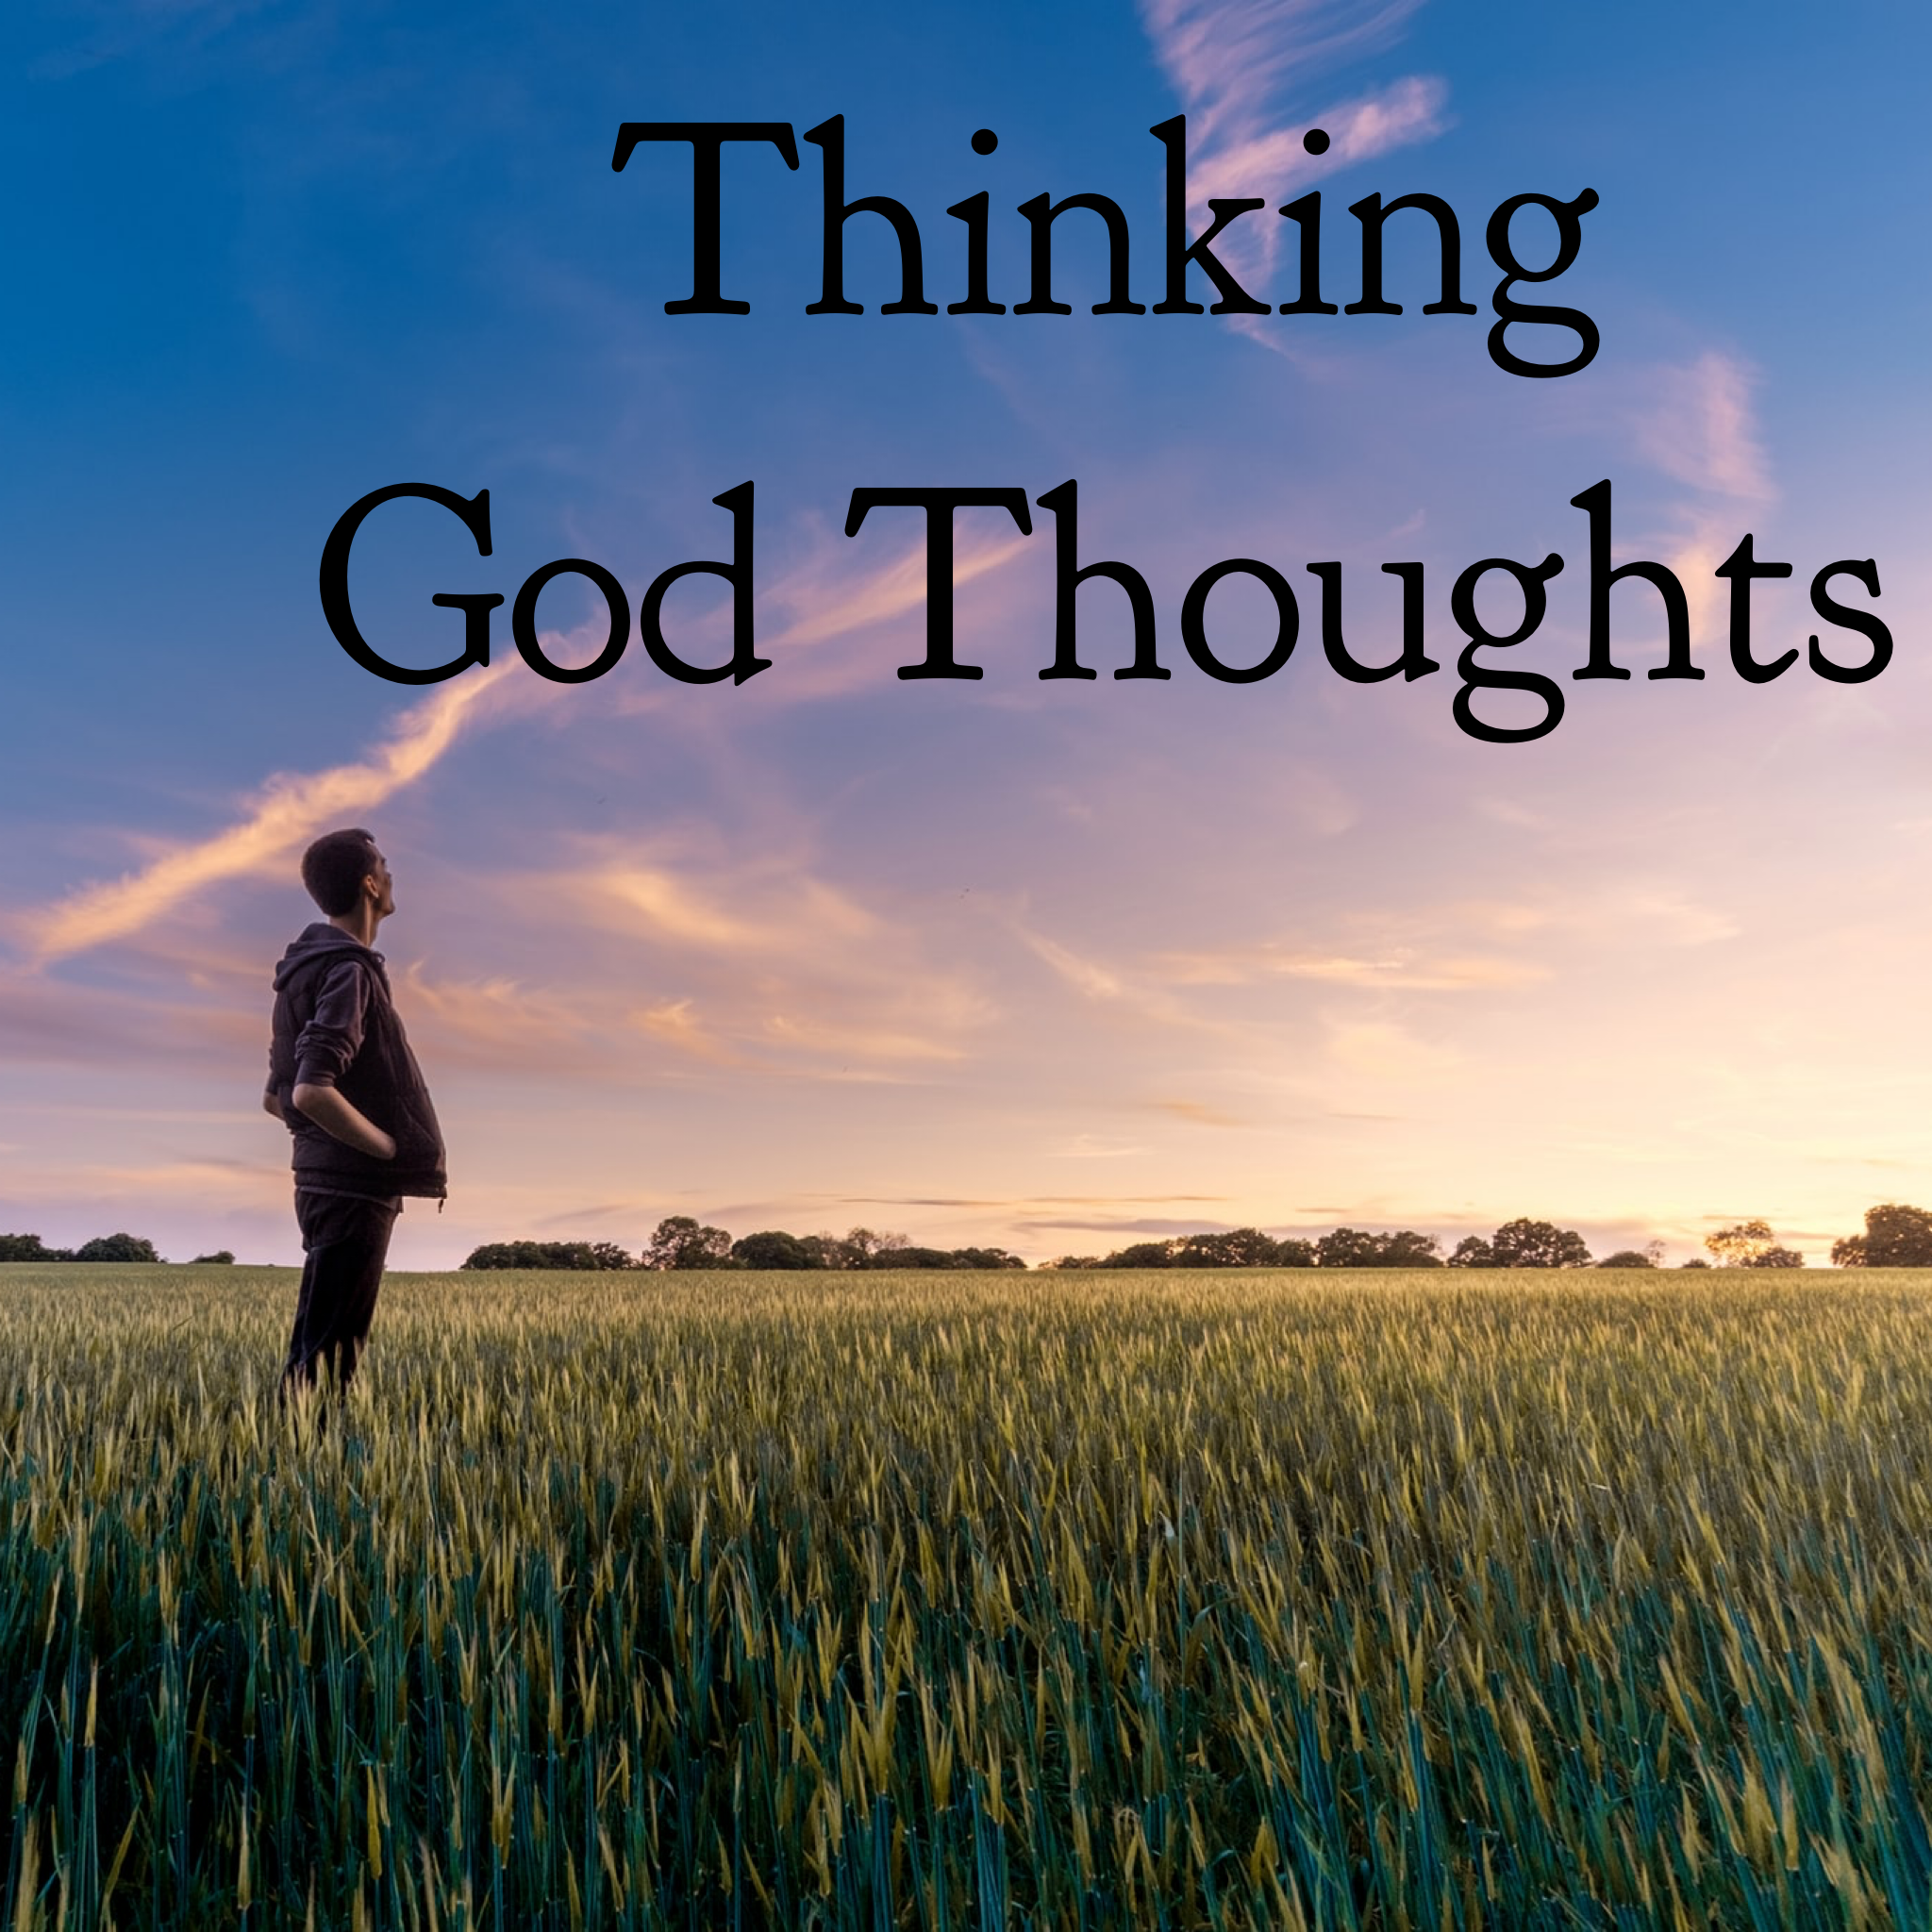 Thinking God Thoughts - 11/22/19